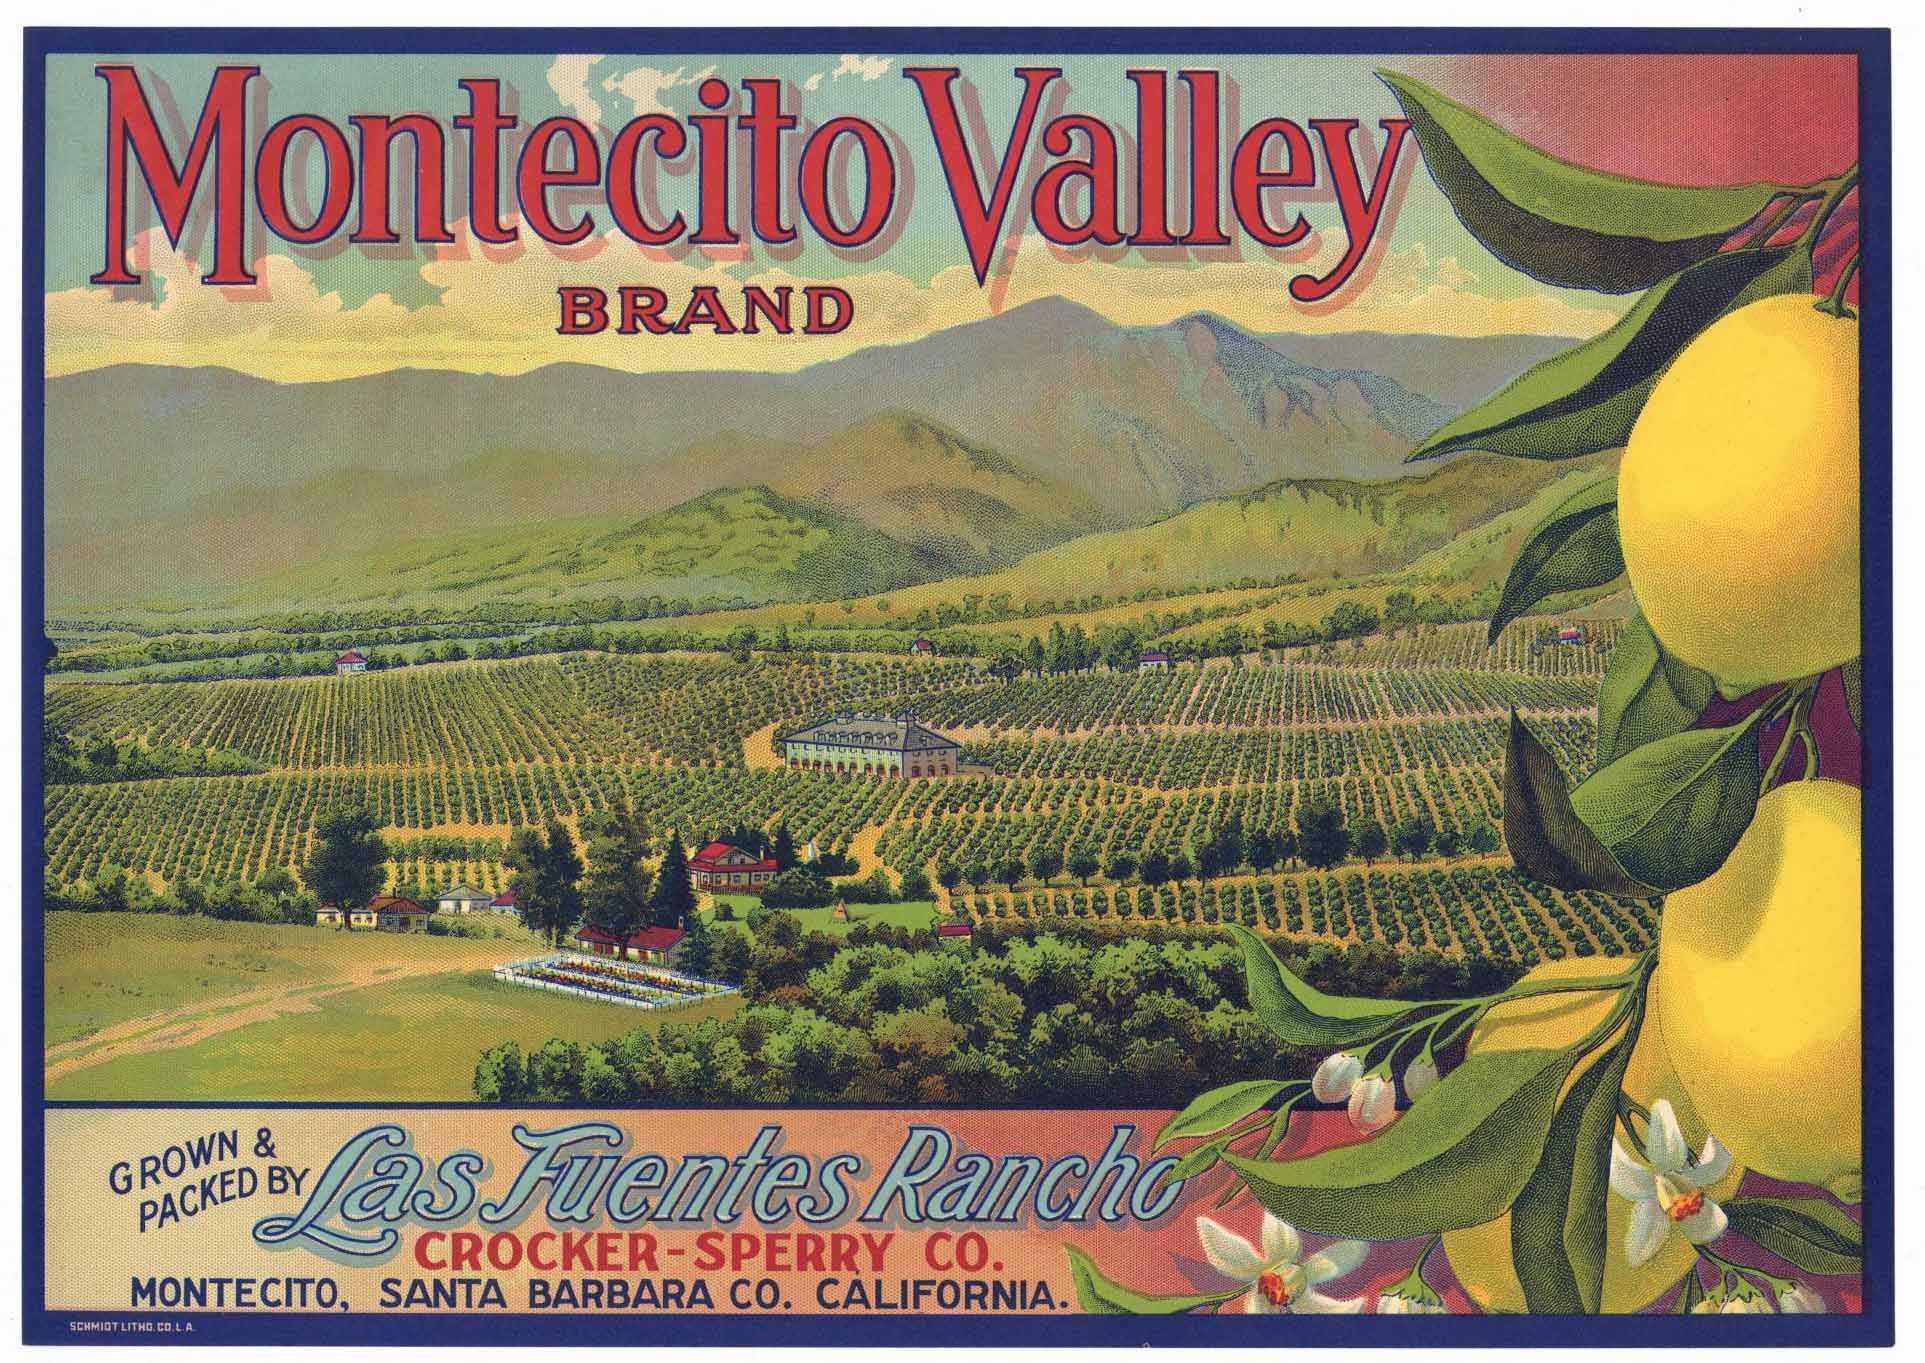 Montectio Valley Brand Vintage Lemon Crate Label